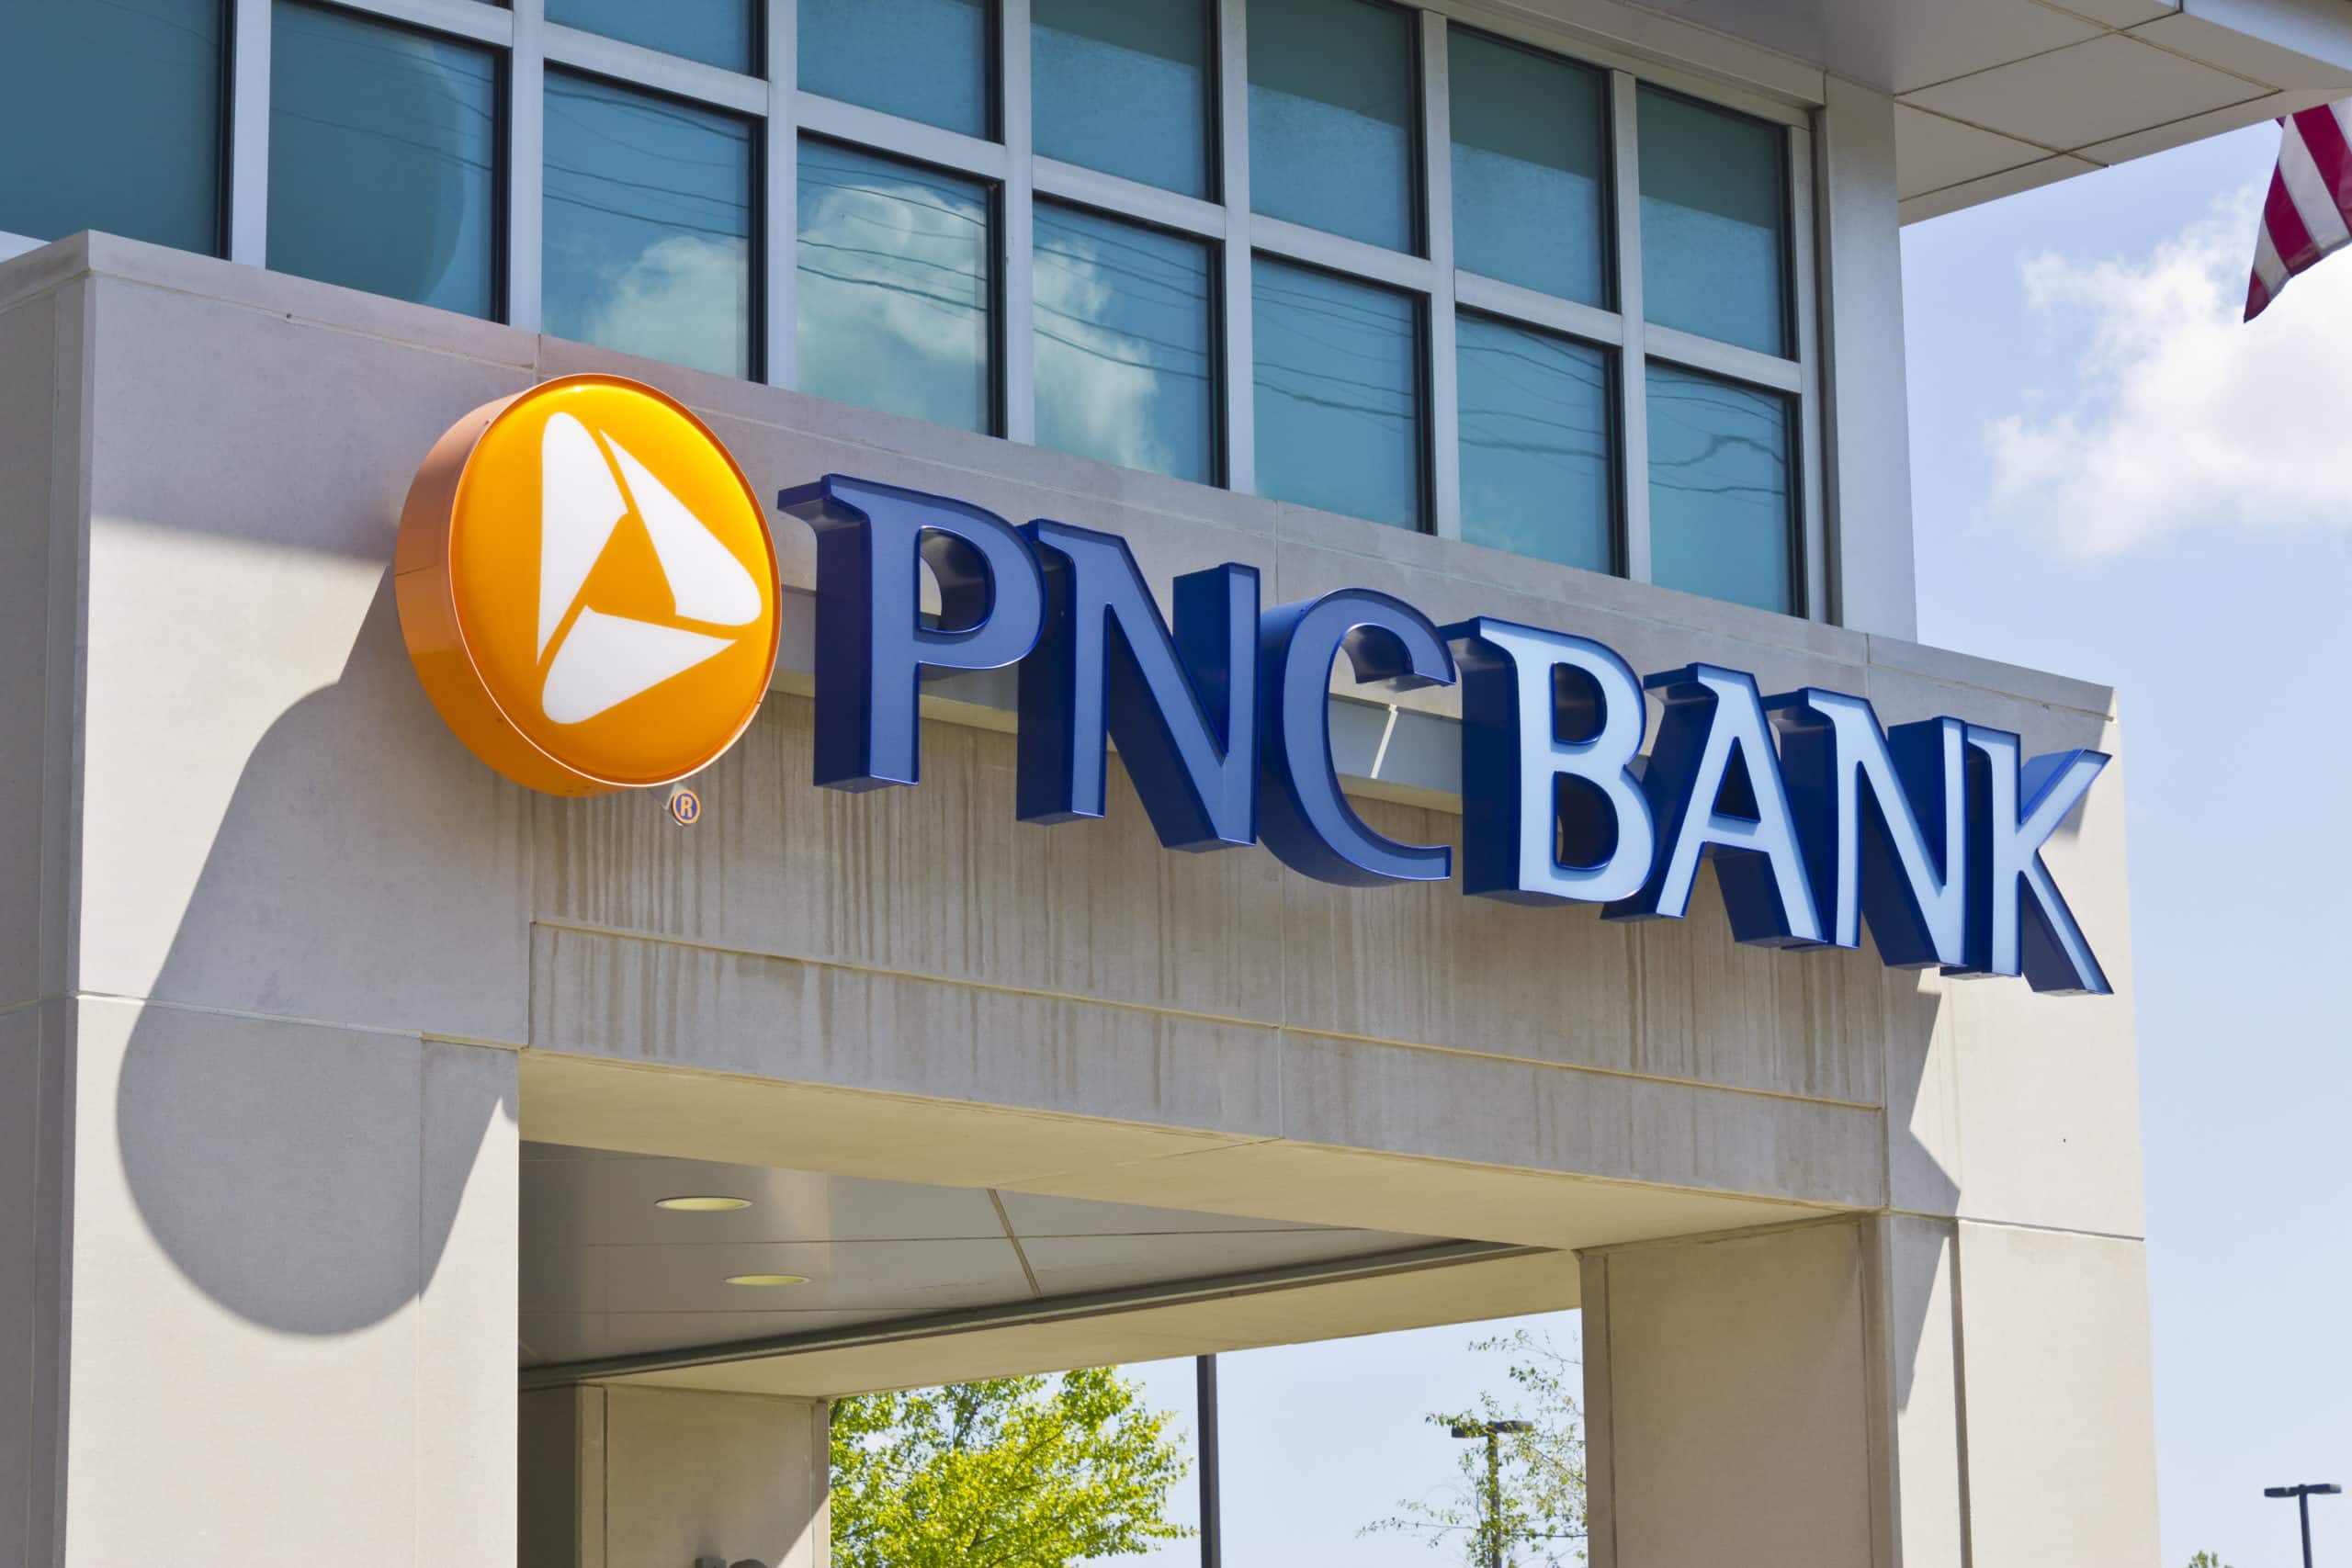 pnc bank reviews